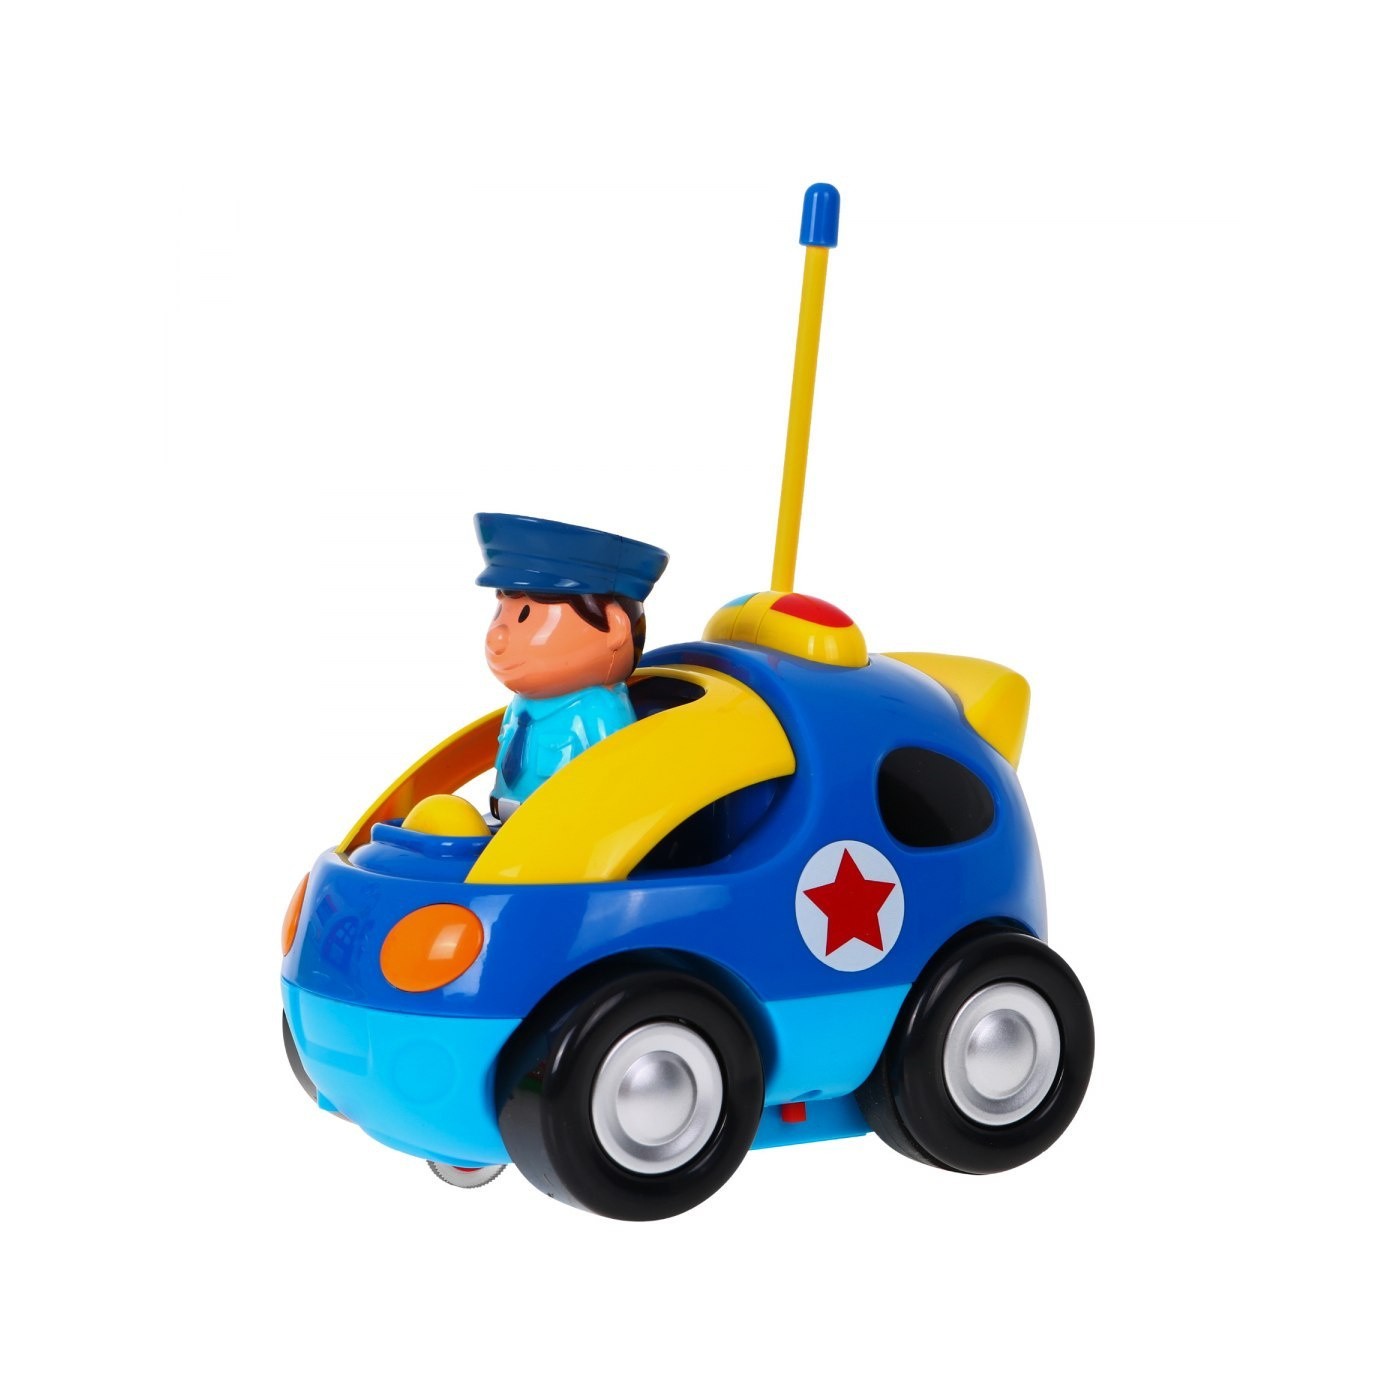 The Police Station Car R C Blue Police